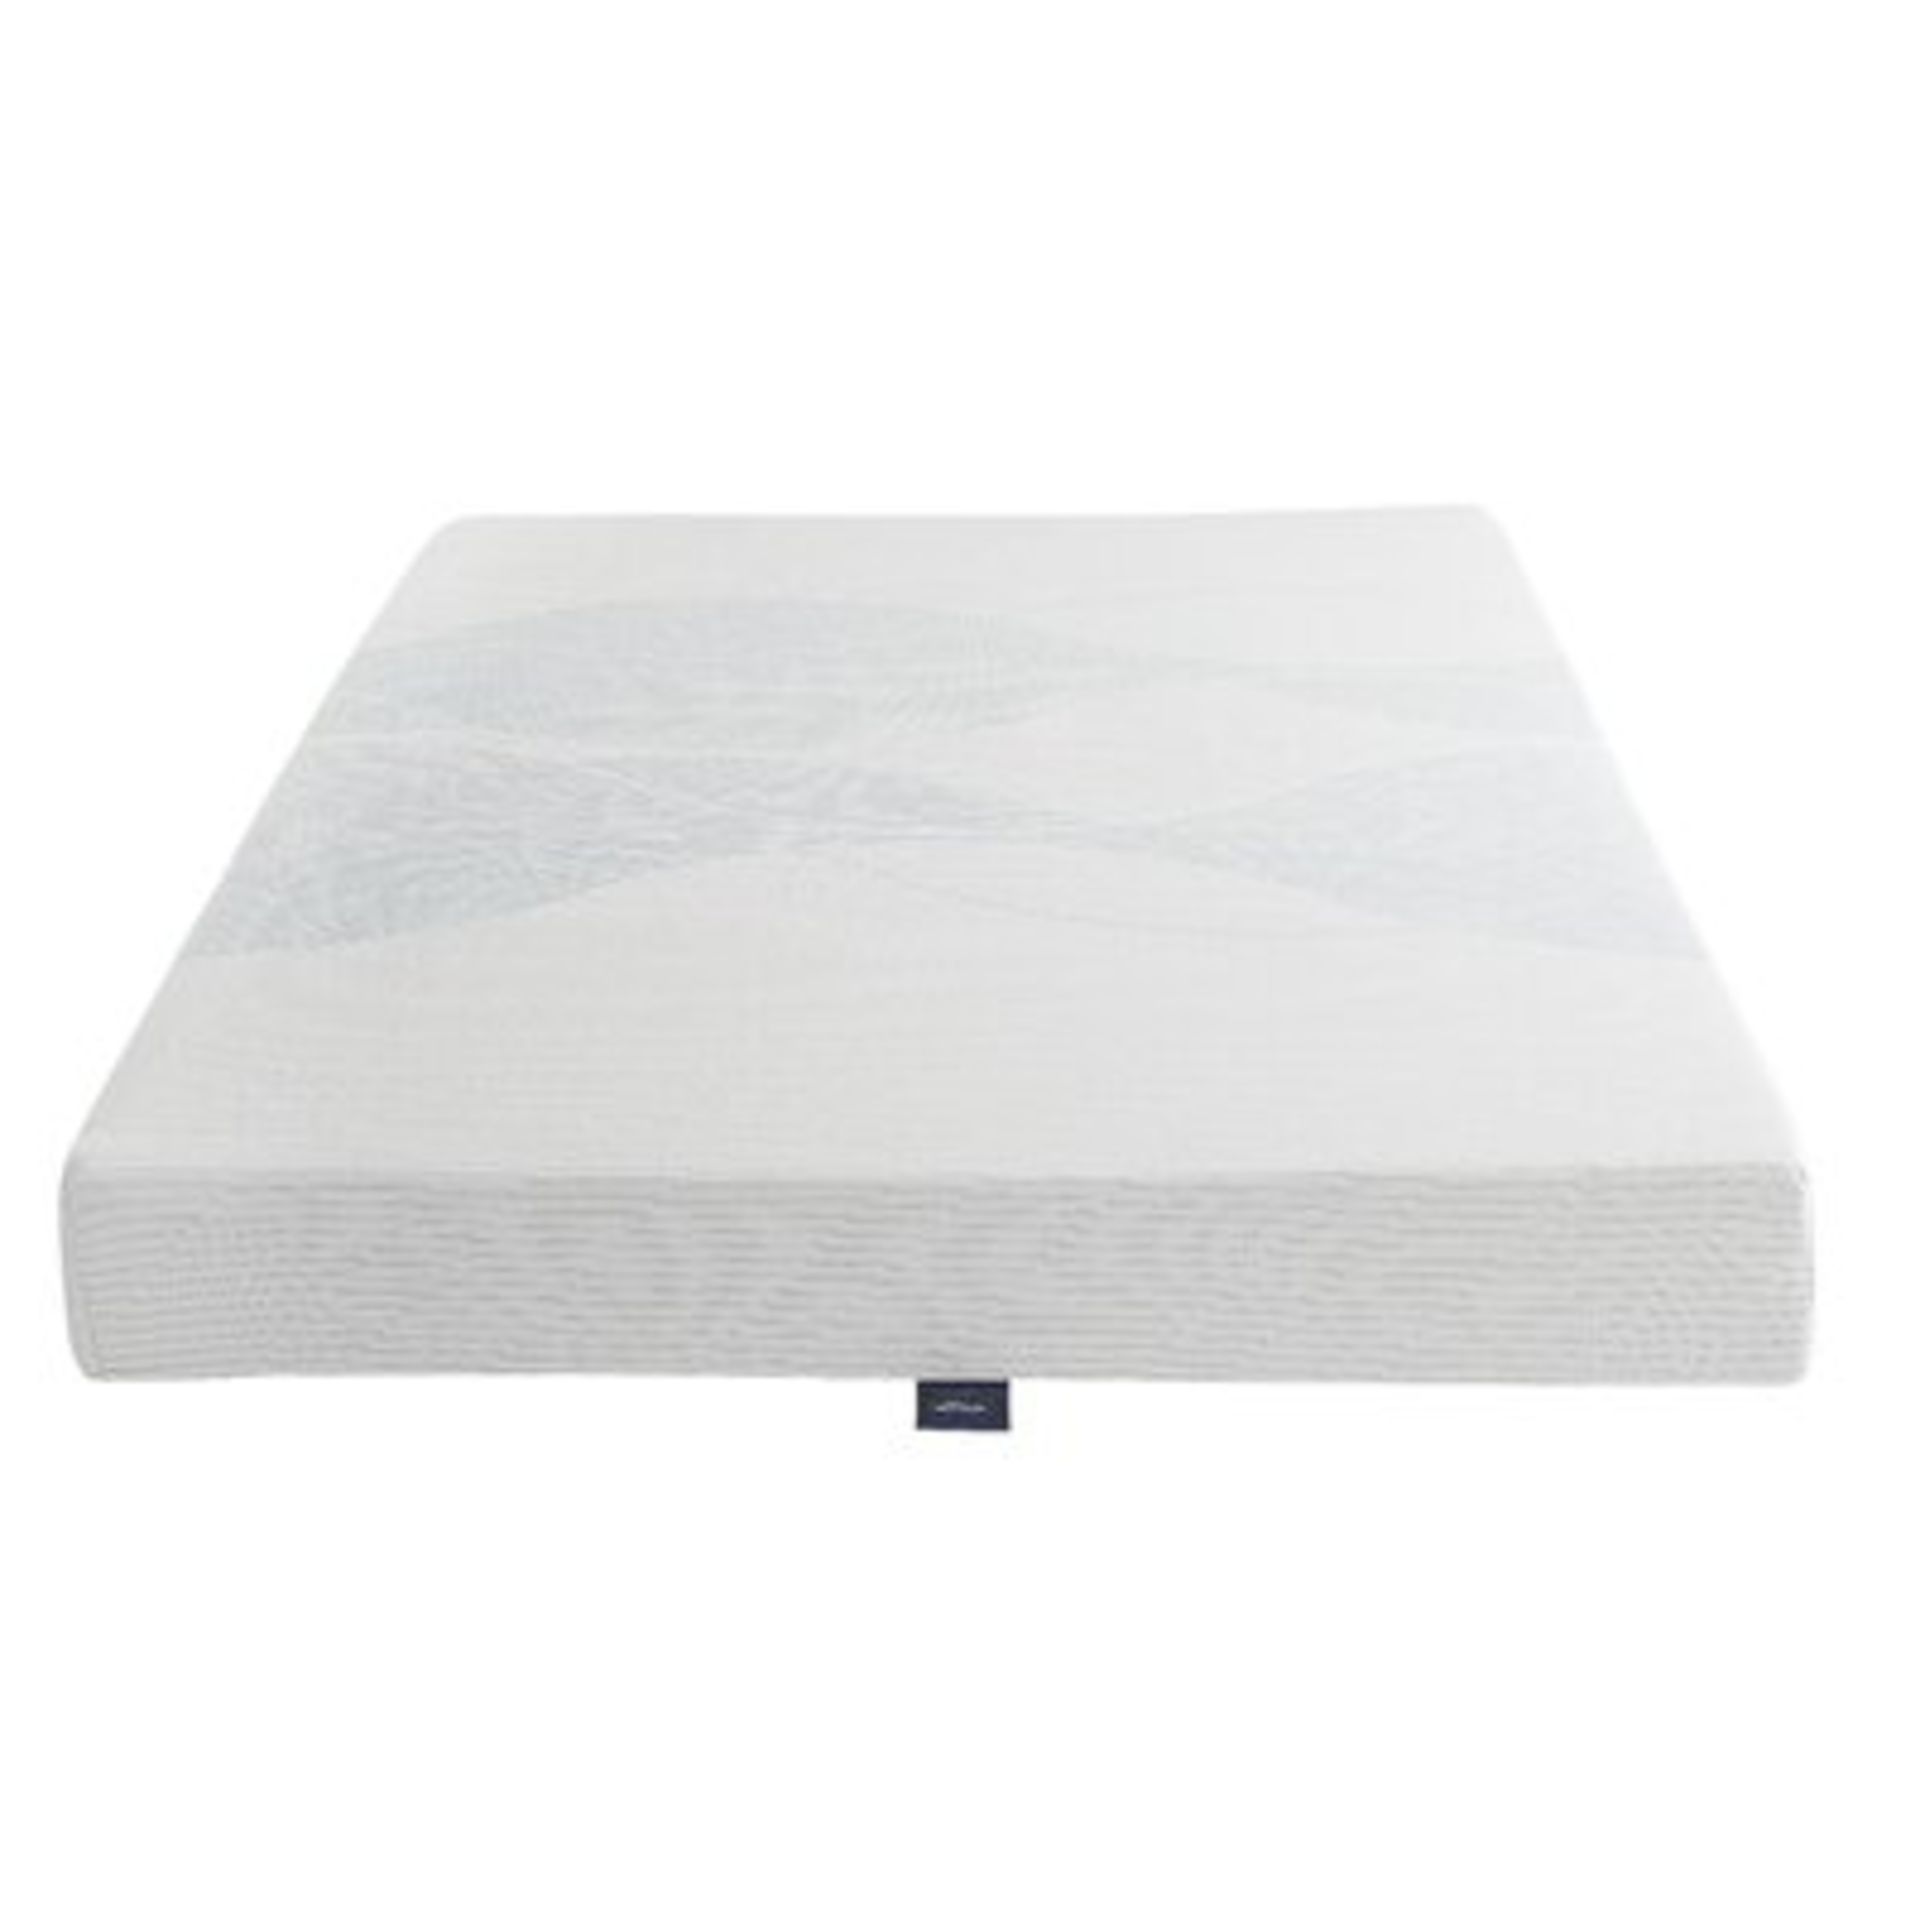 Silent Night Rolled Up e Memory Foam Mattress. European Double. 140x200cm. The mattress contains a